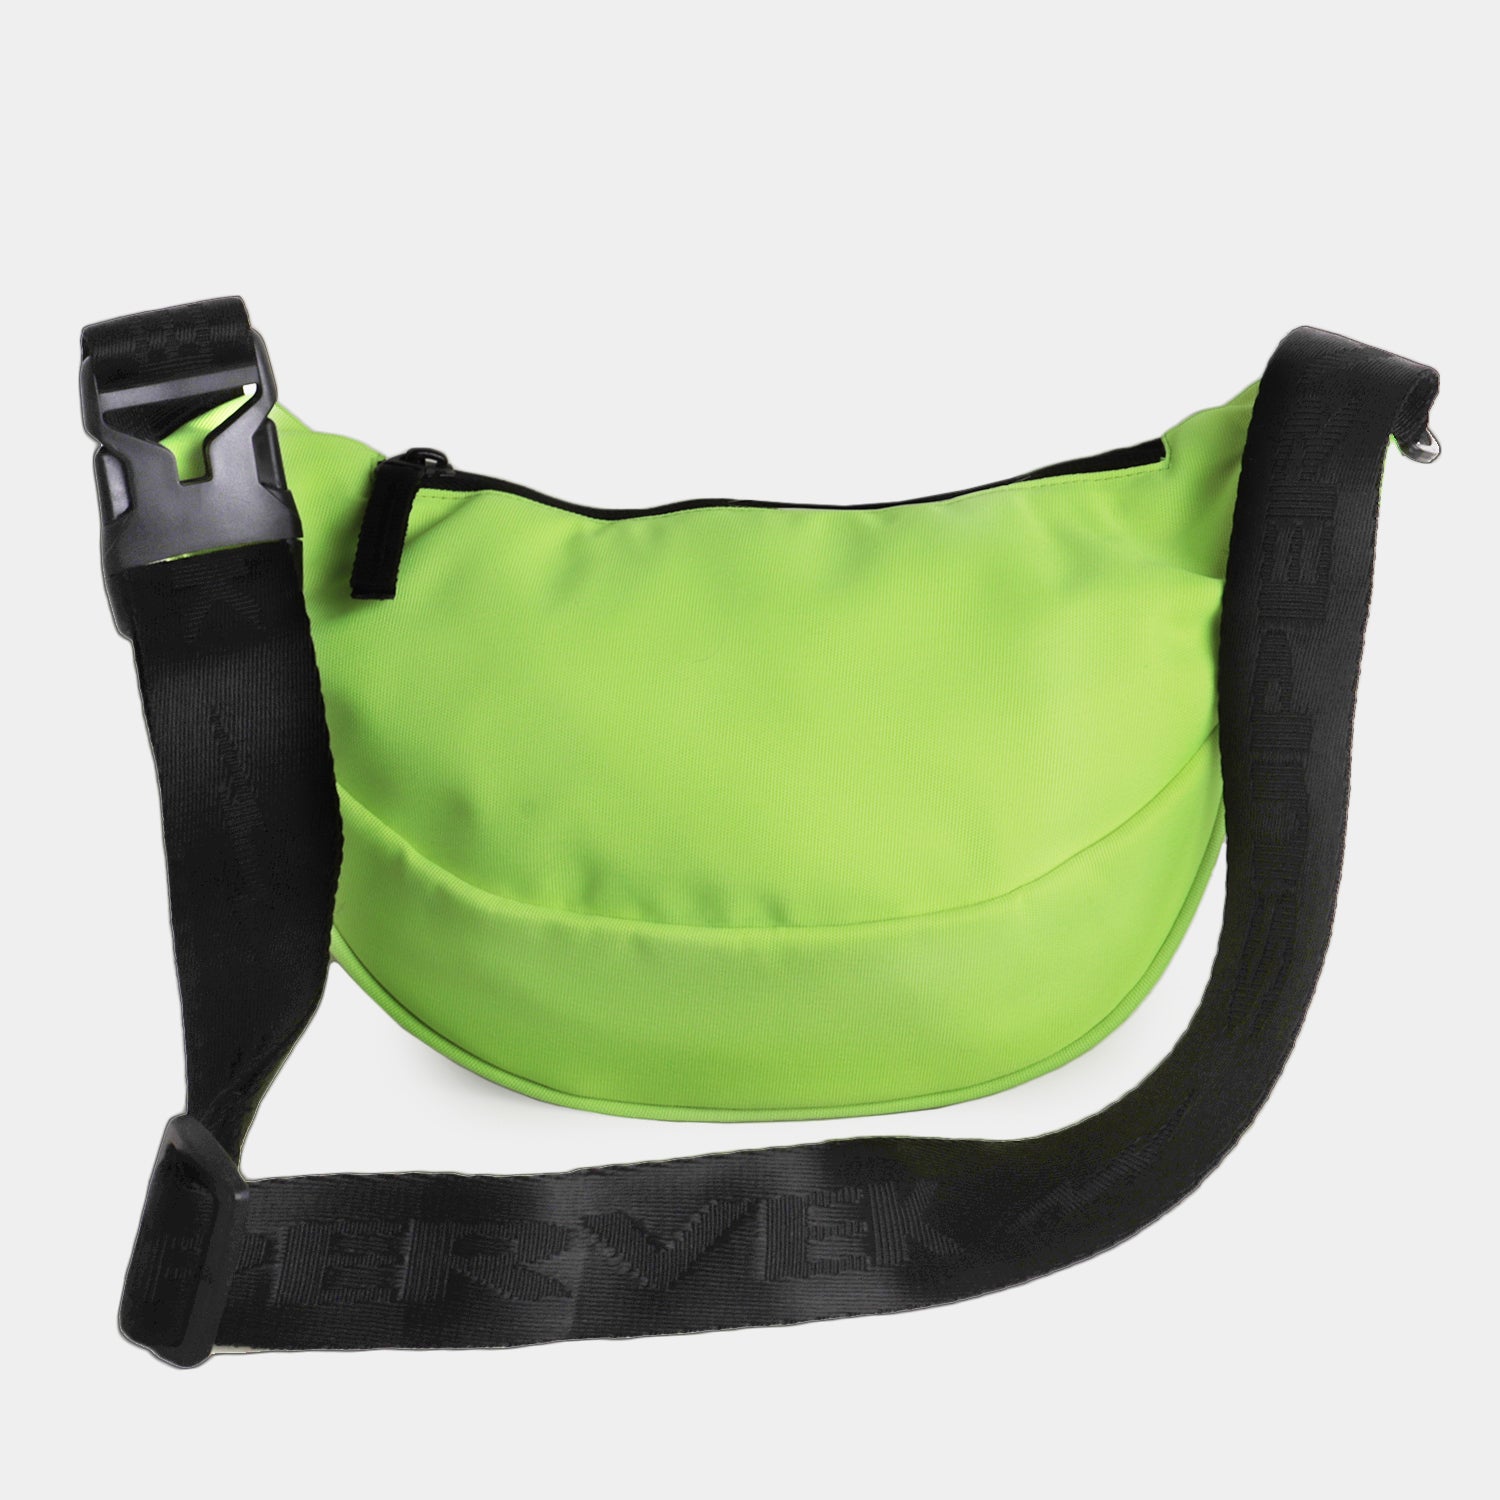 Supervek Crossbody Slinger - Vetric Lime - Urban Functional Fanny Hip Bag for Everyday Essentials - Back